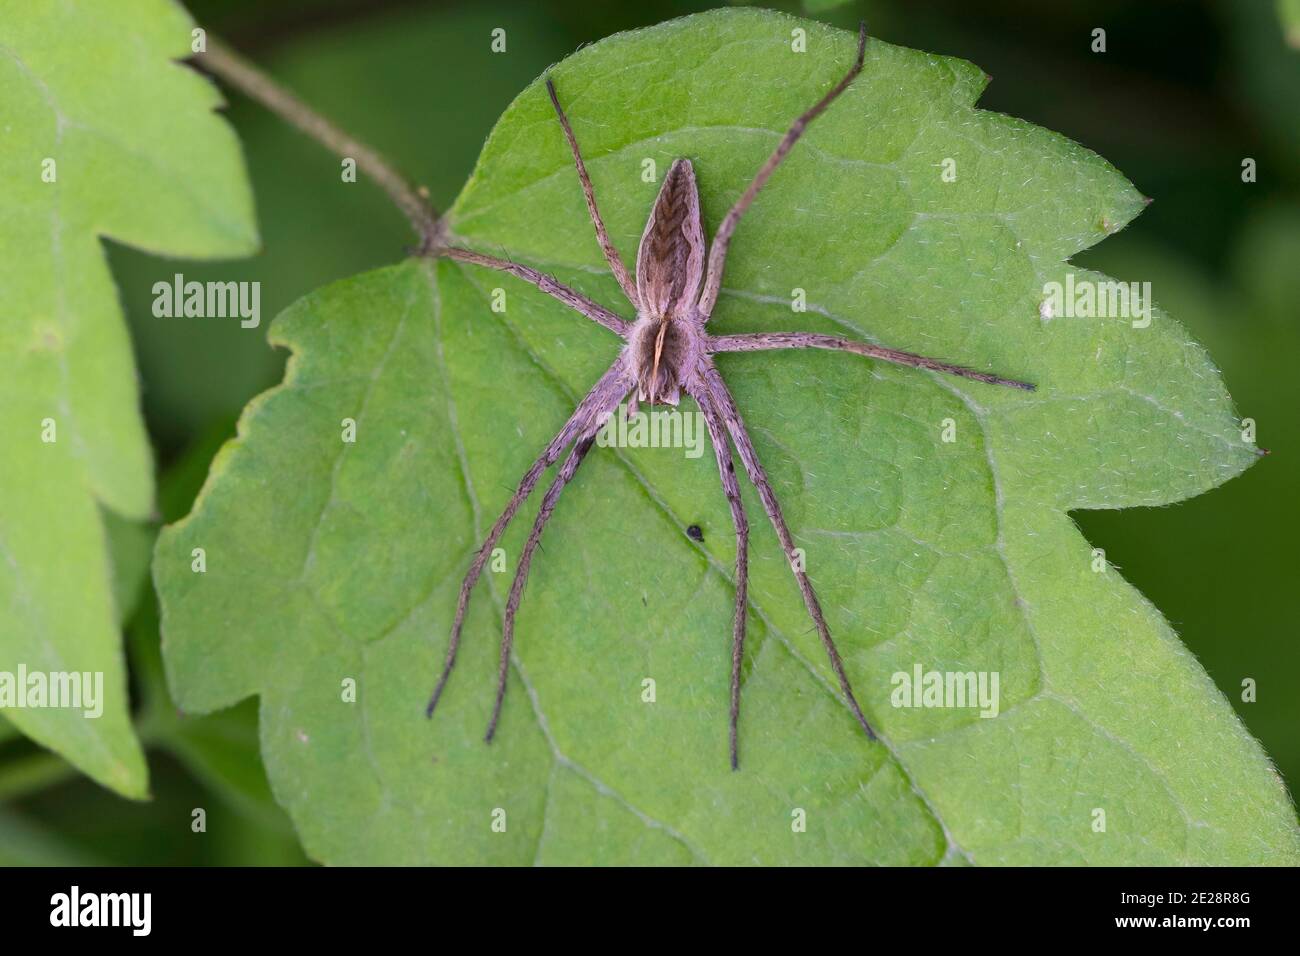 Nursery web spider, Fantastic fishing spider (Pisaura mirabilis), sits on a leaf, Germany Stock Photo